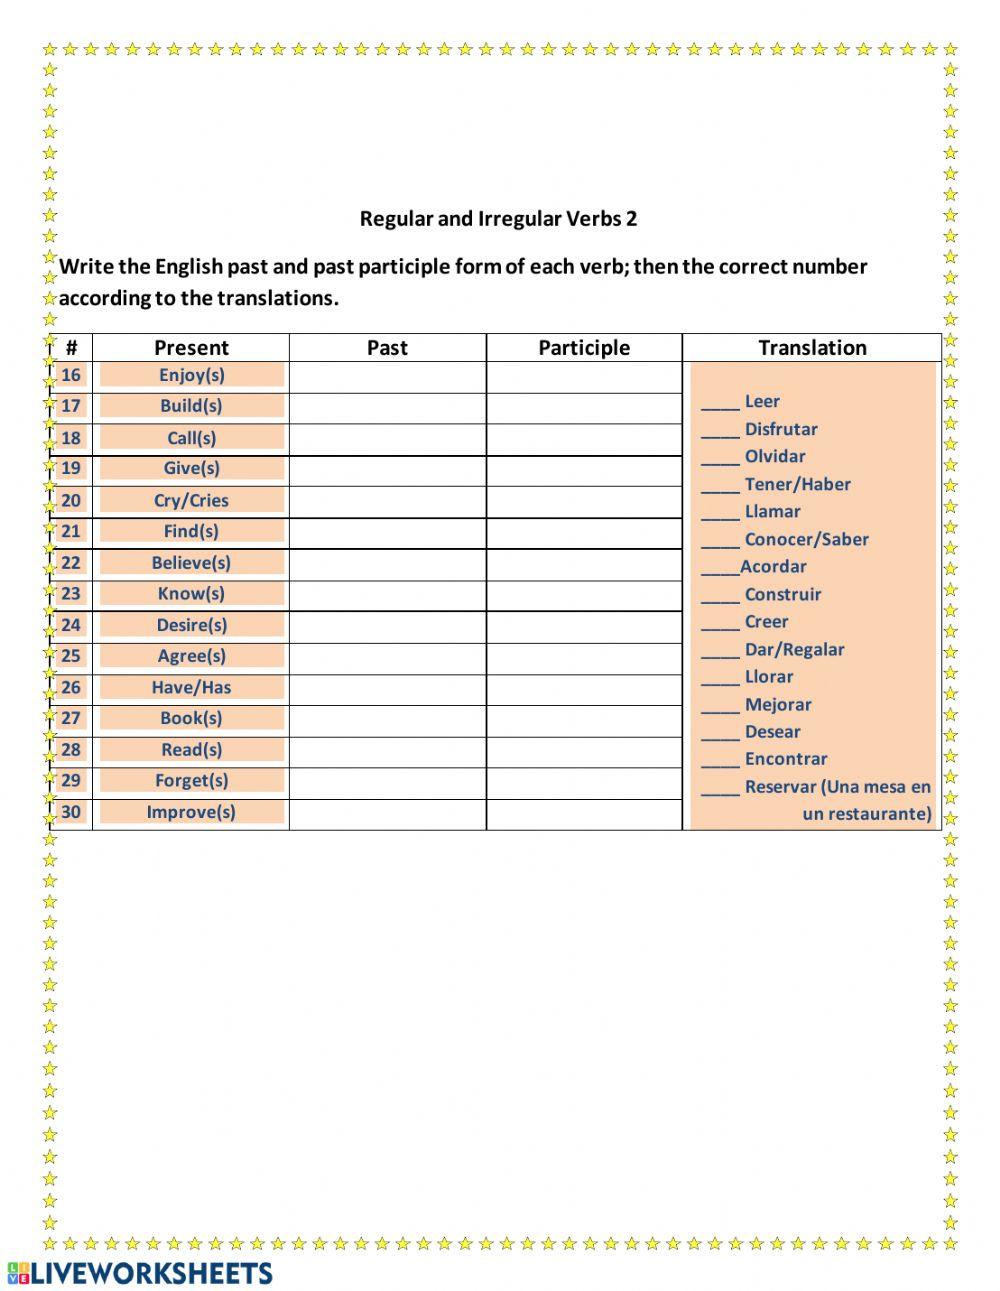 Regular and Irregular verbs 2